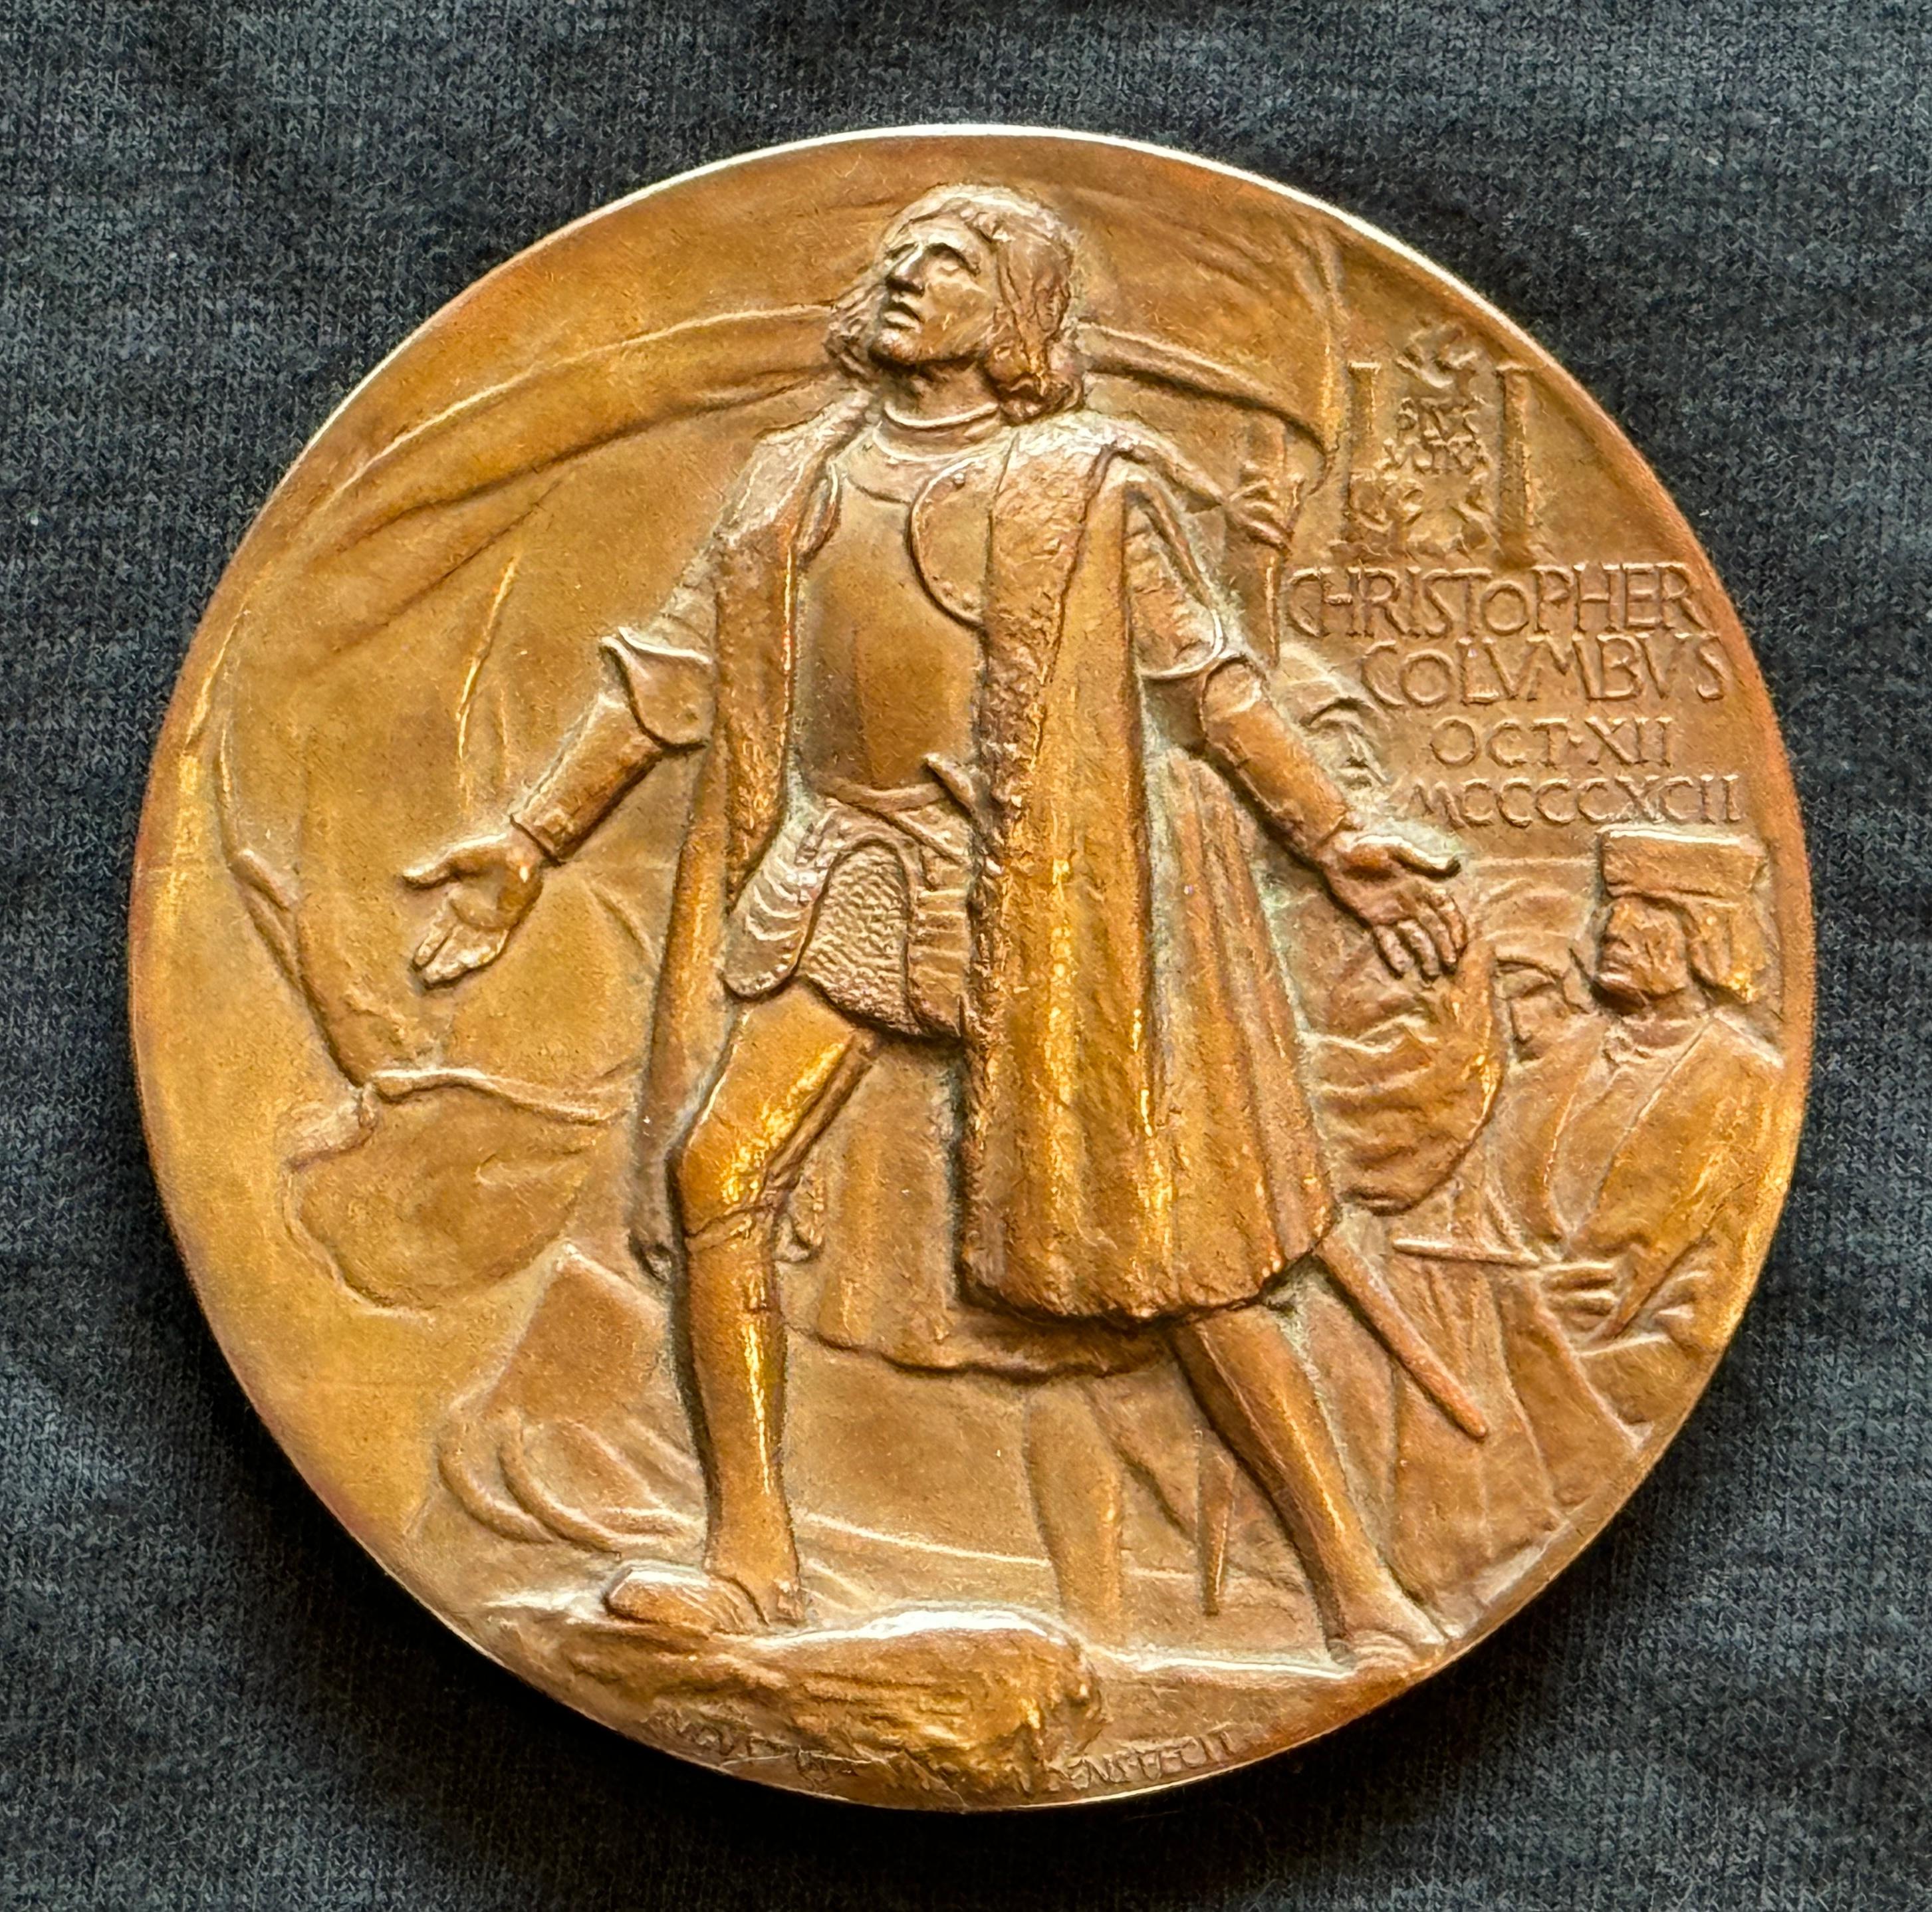 Columbian Exposition Commemorative Präsentationsmedaille der Weltausstellung – Sculpture von Augustus Saint-Gaudens